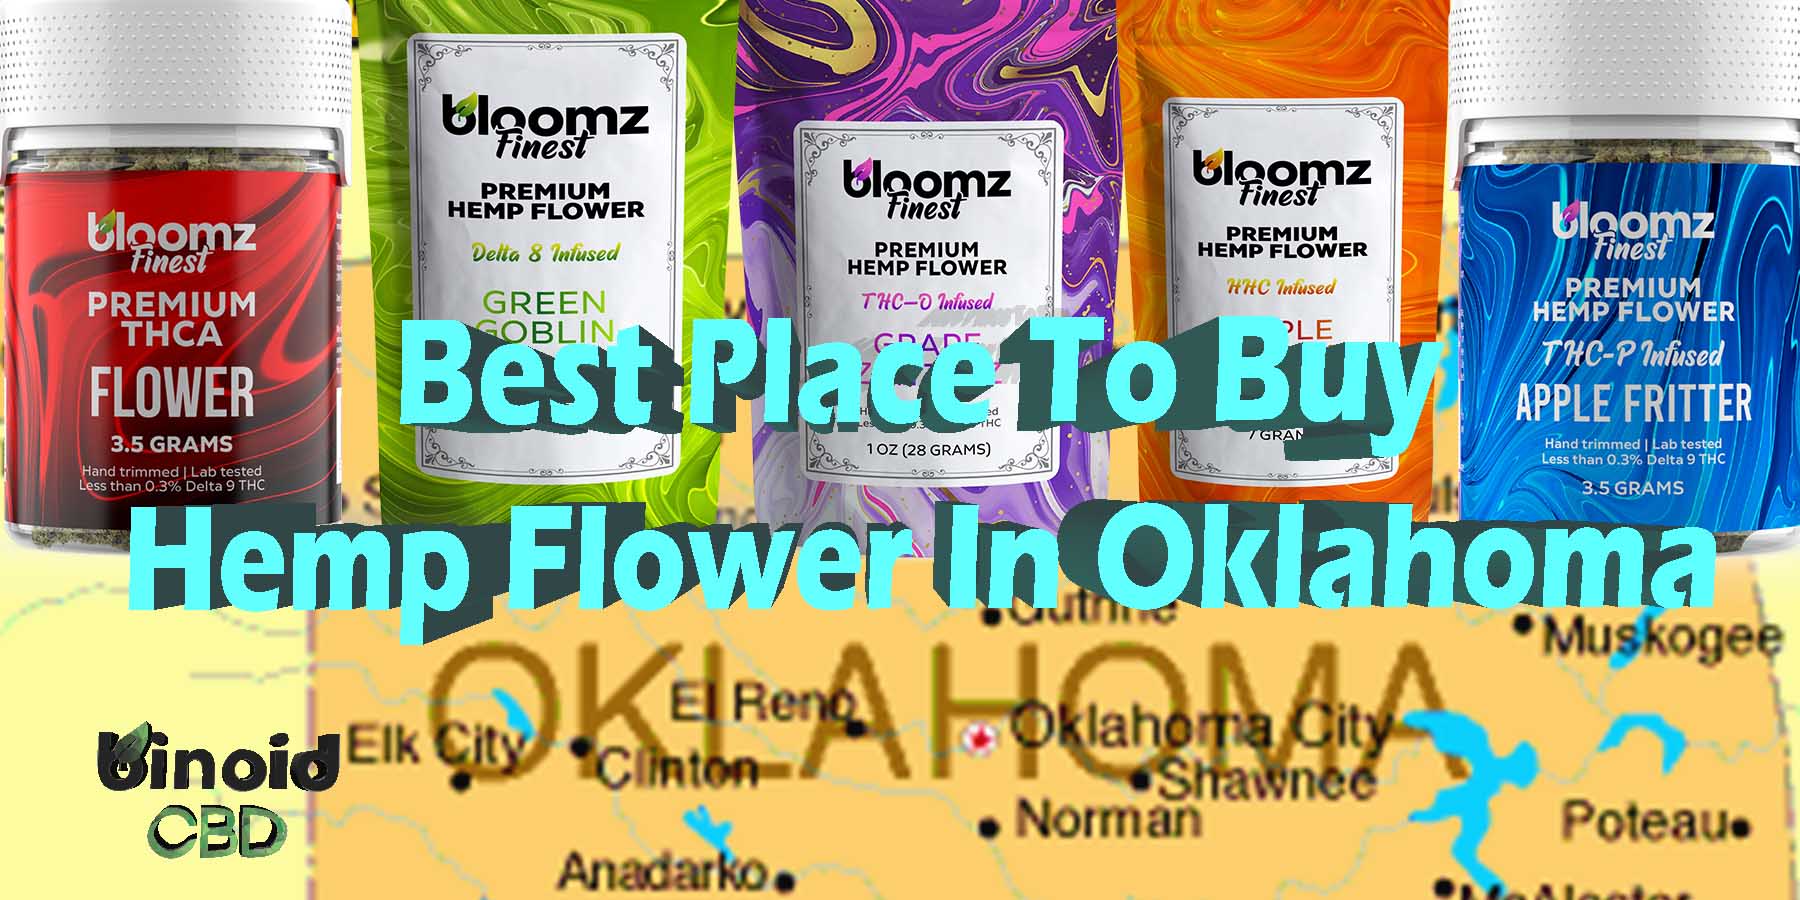 Buy Hemp Flower Oklahoma PreRolls Get Online Near Me For Sale Best Brand Strongest Real Legal Store Shop Reddit